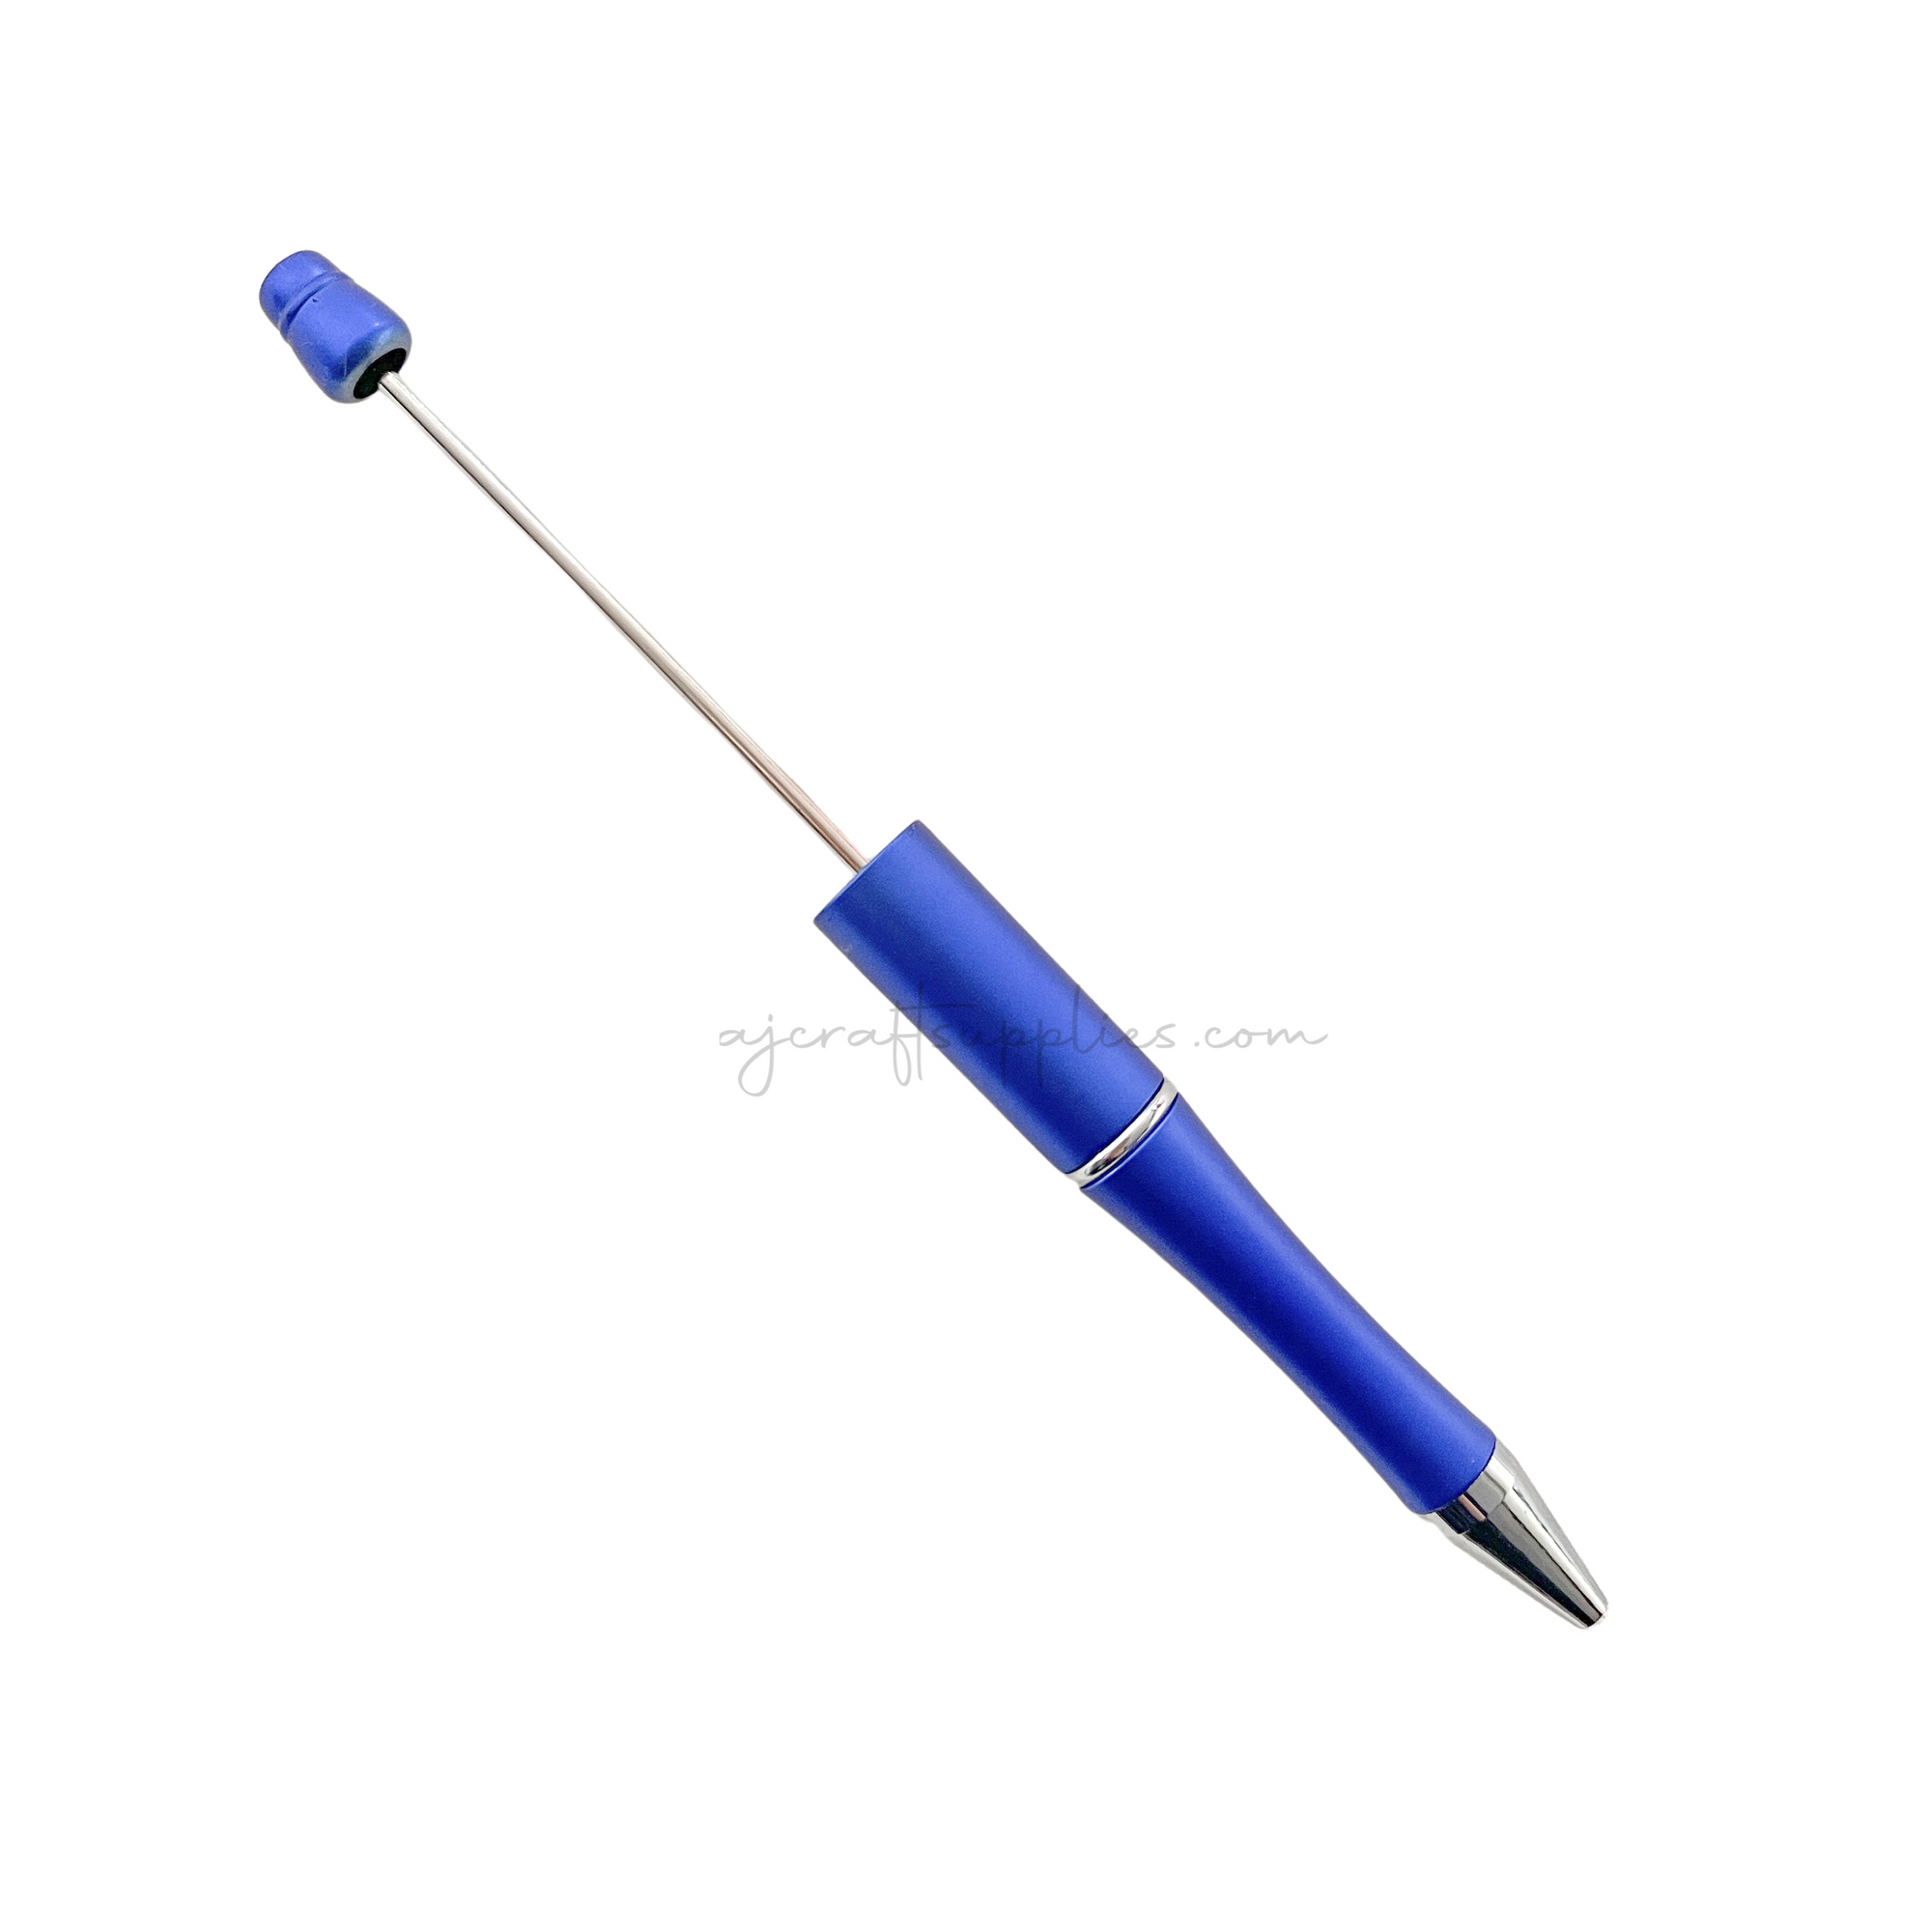 Beadable Pen Blanks - Brushed Royal Blue - Each